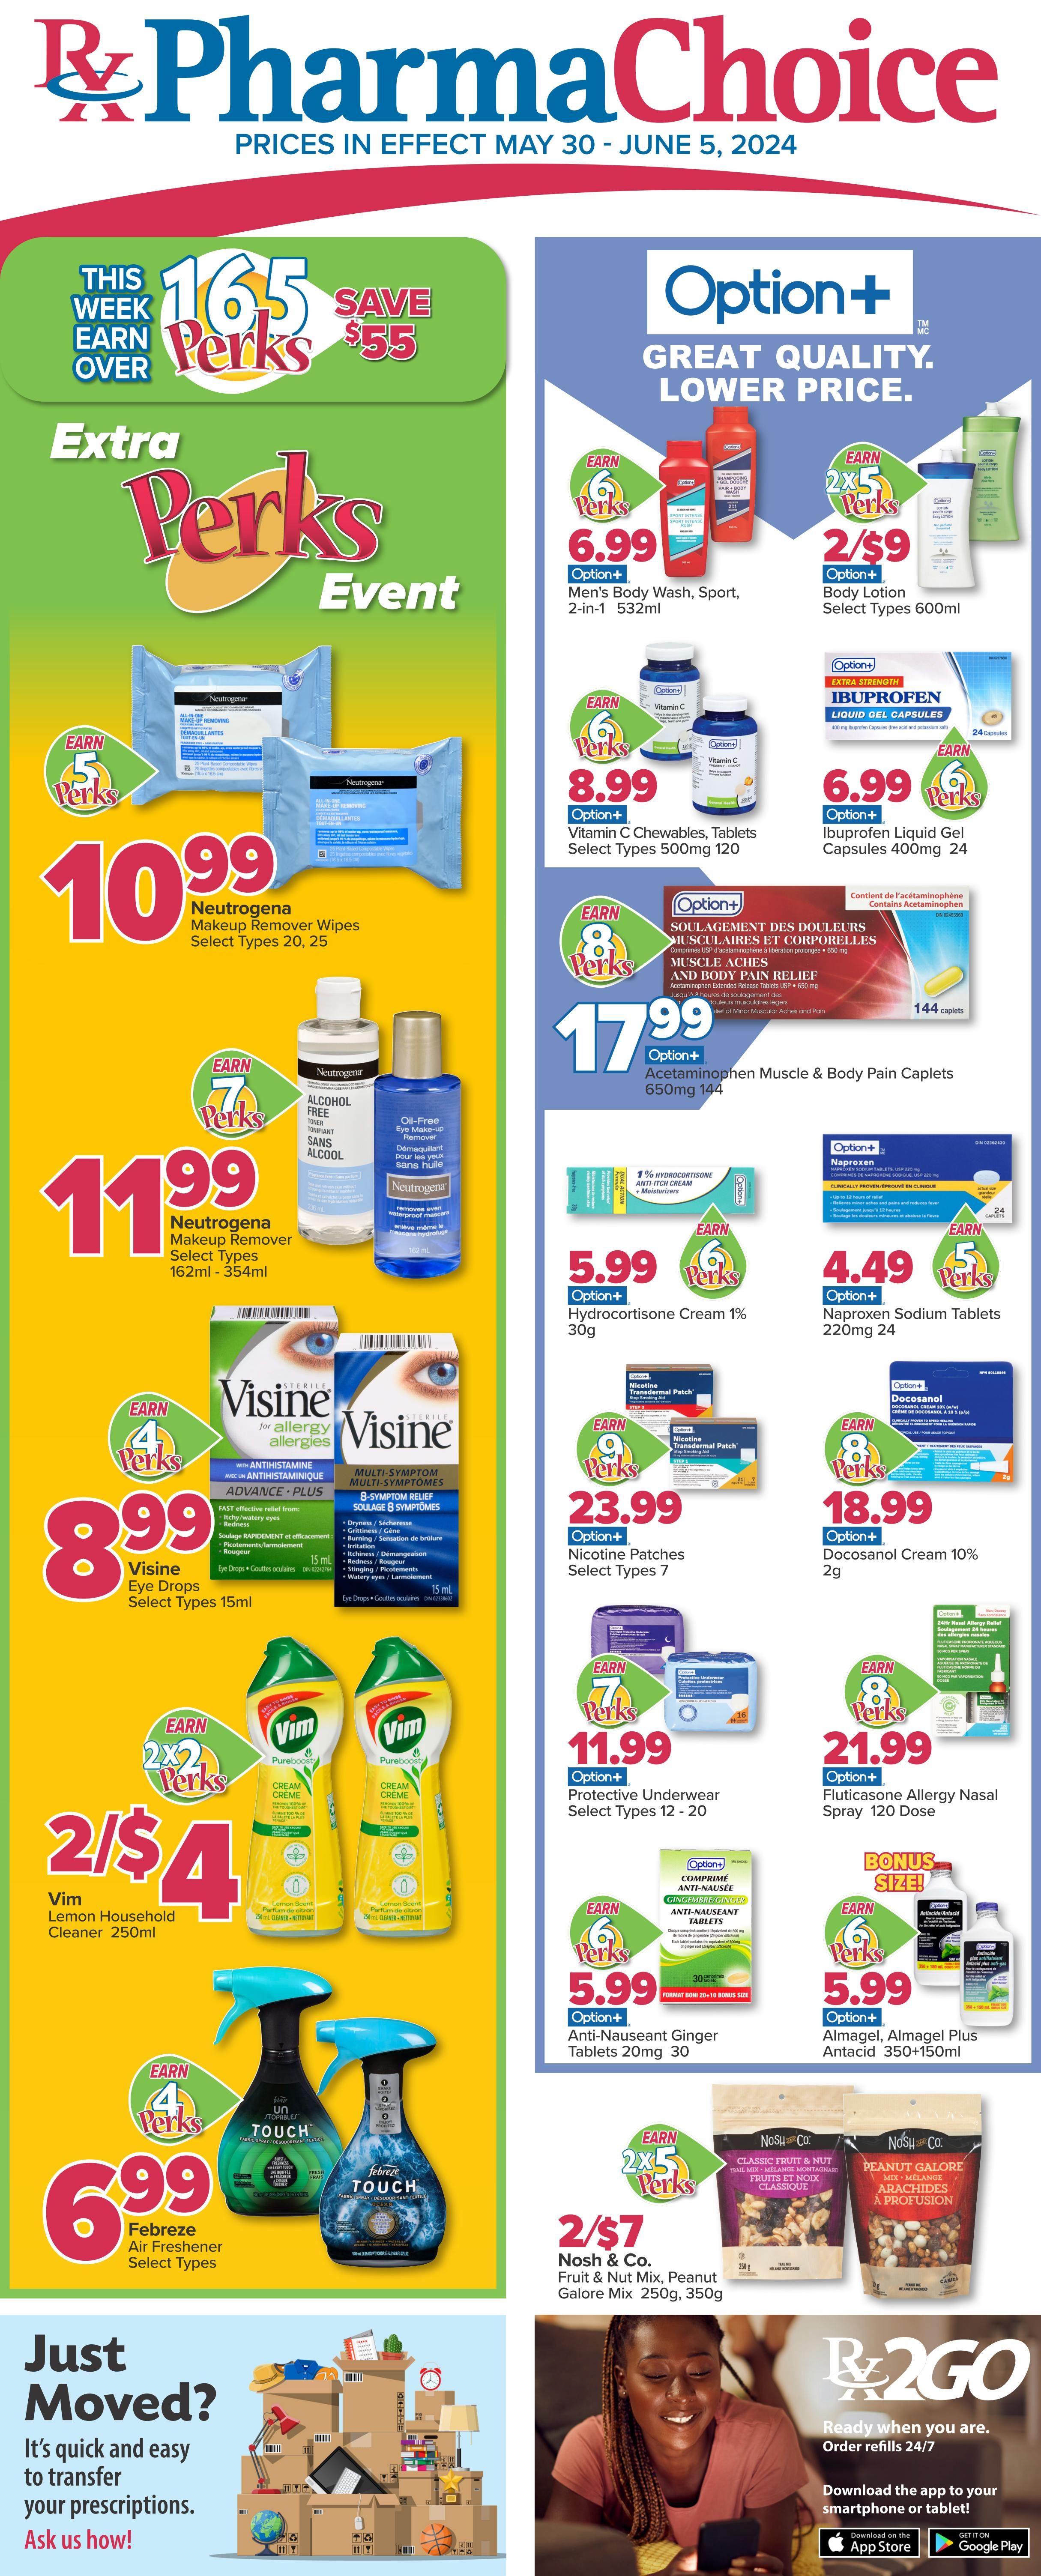 PharmaChoice - Western Canada - Weekly Flyer Specials